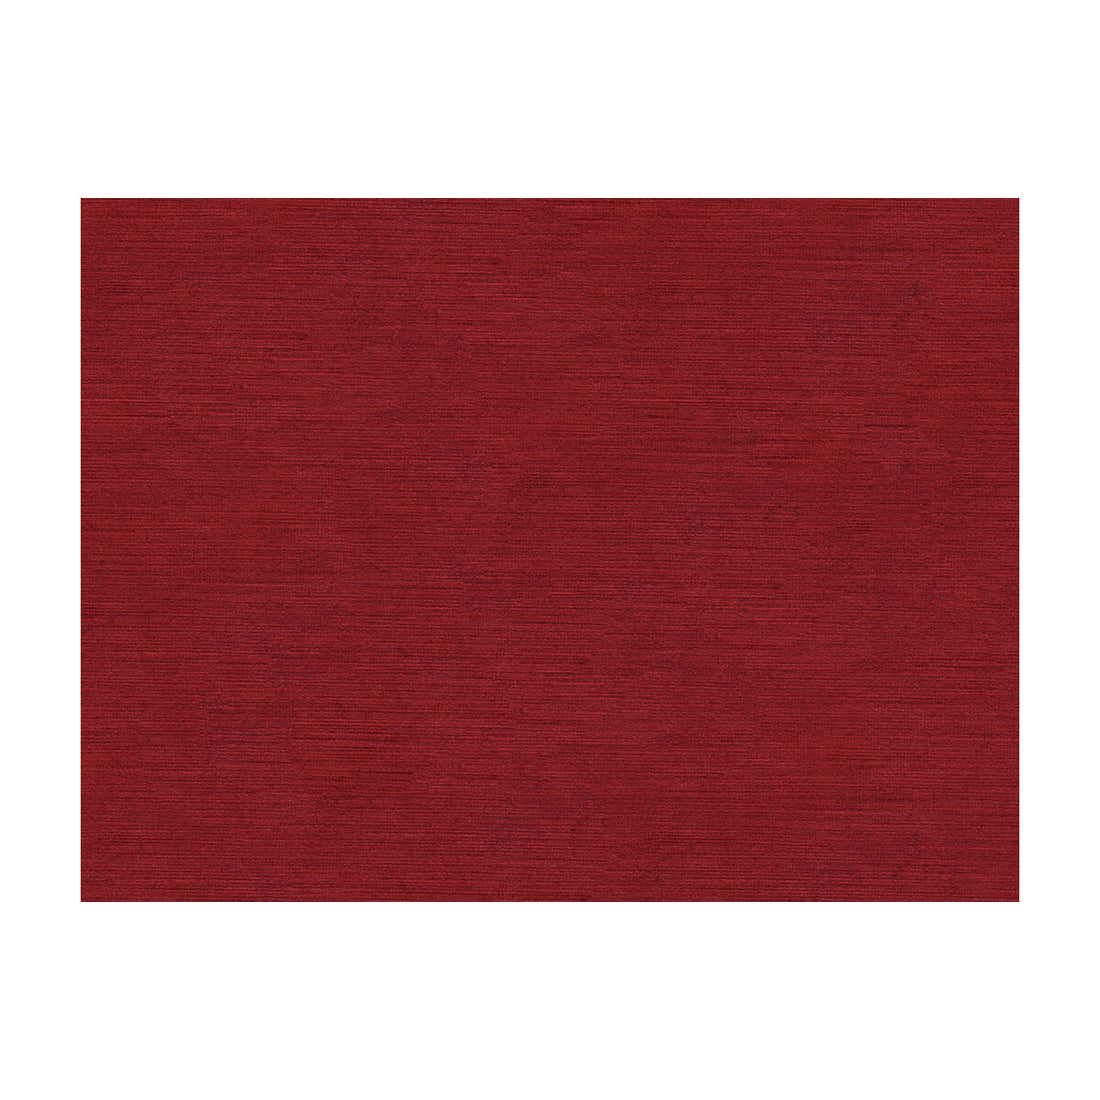 Quillan Velvet fabric in chianti color - pattern BR-89777.182.0 - by Brunschwig &amp; Fils